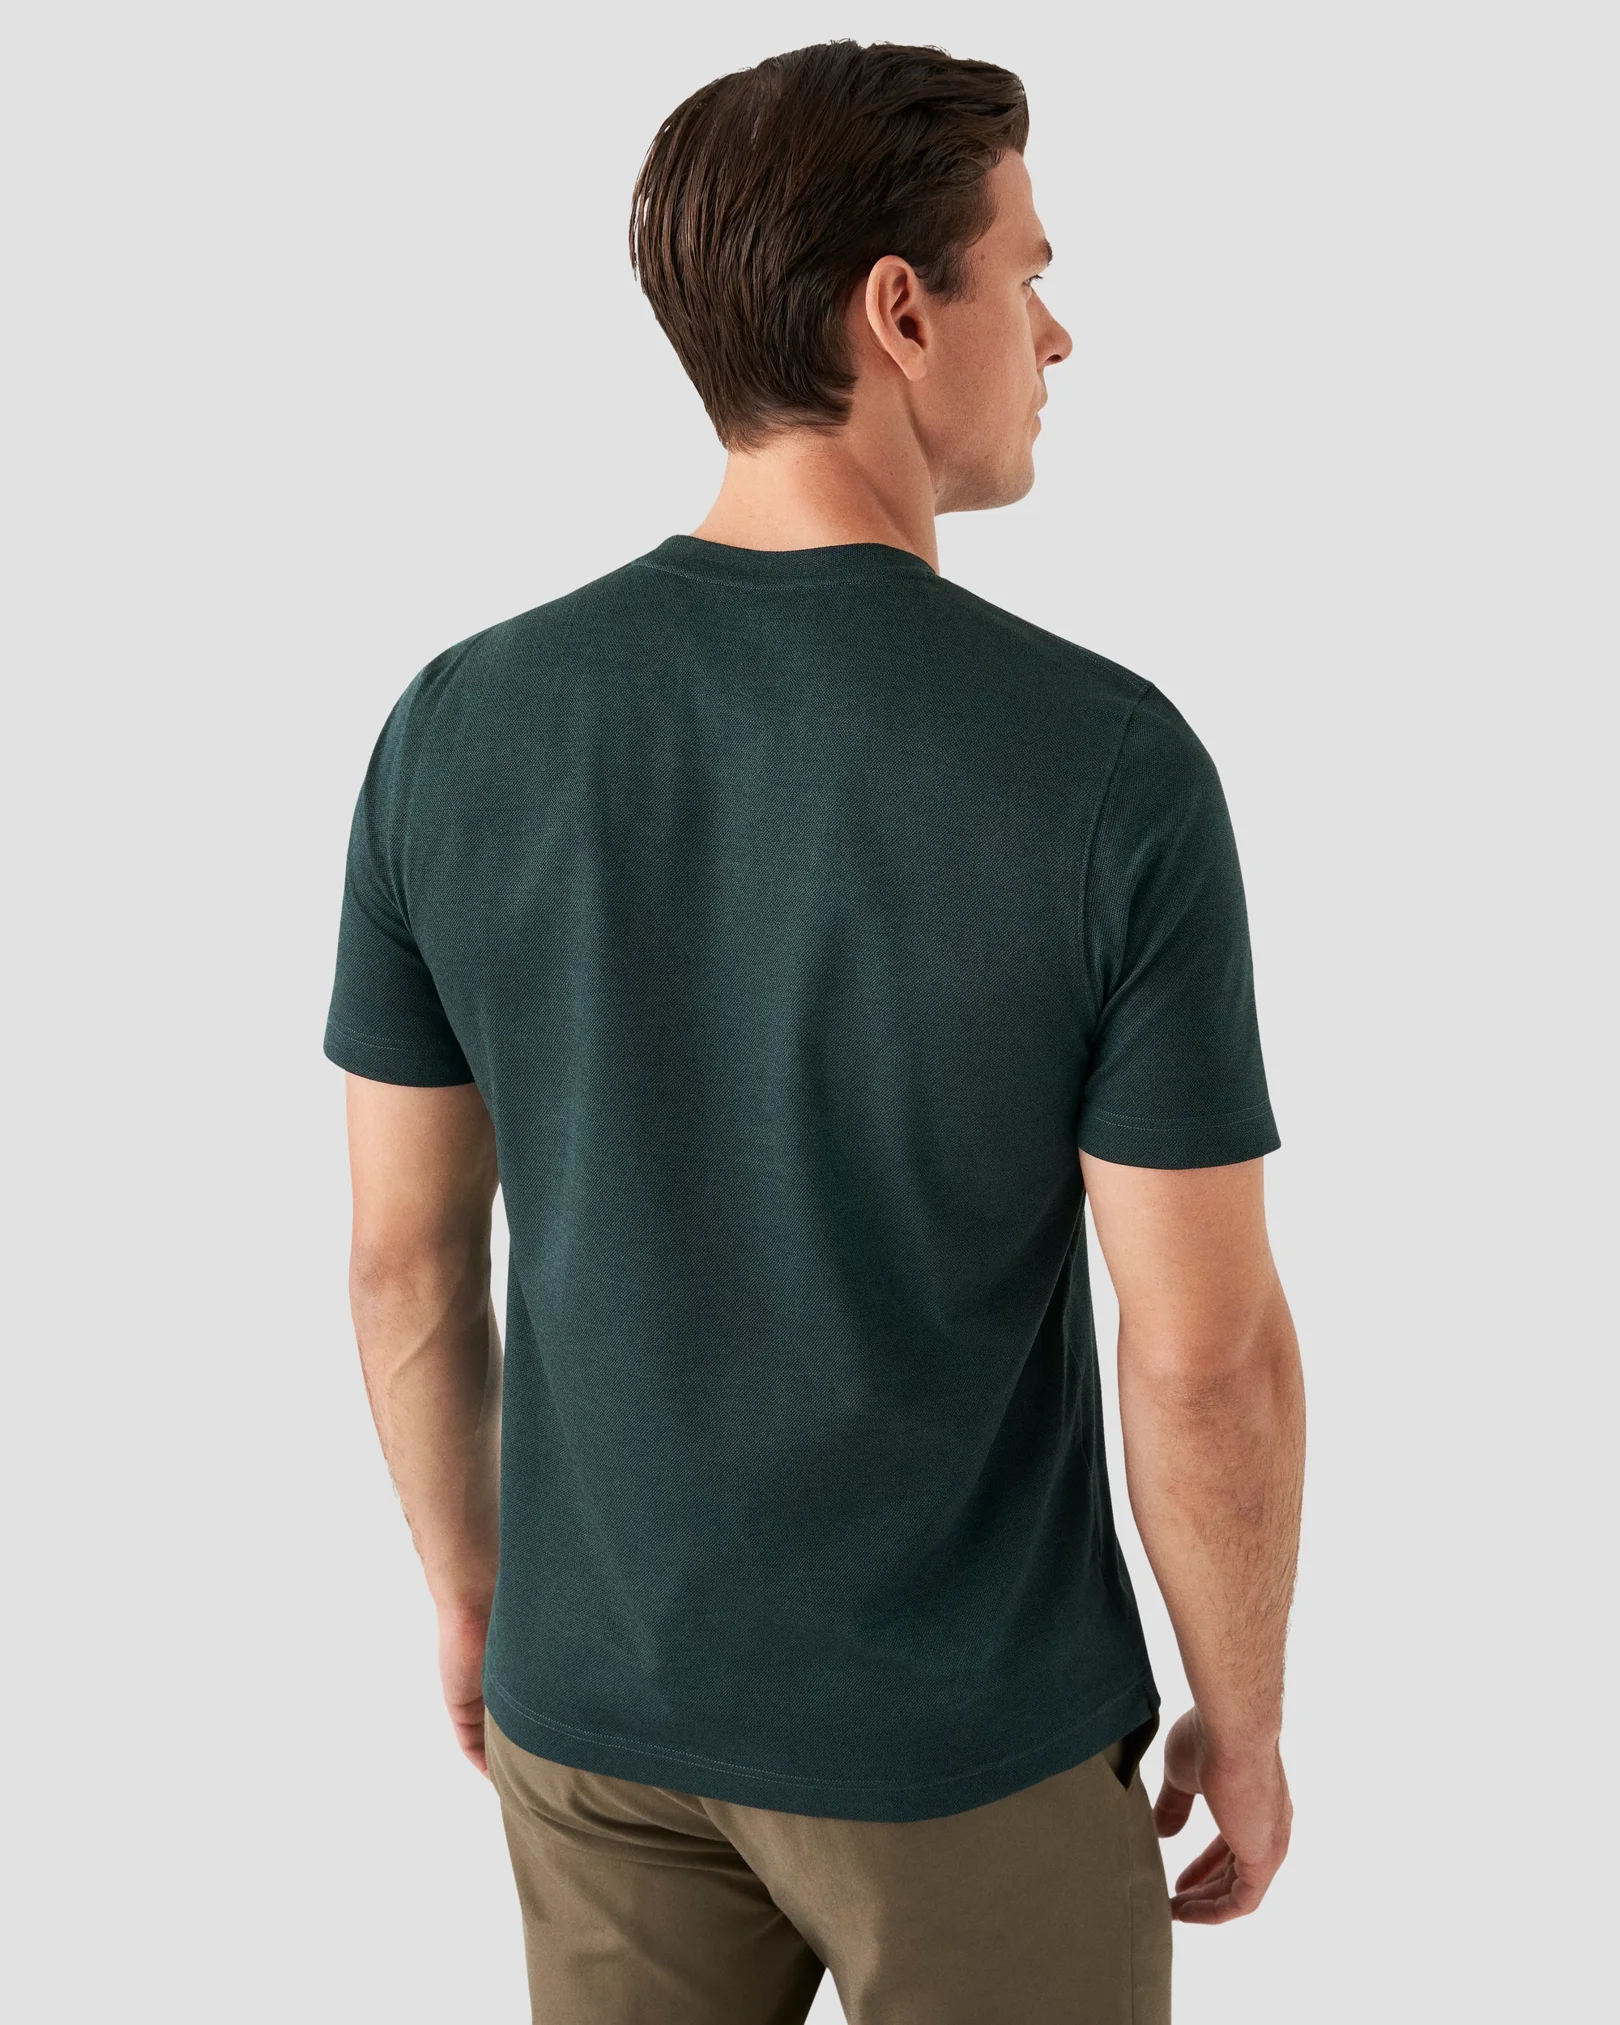 Eton - dark green t shirt